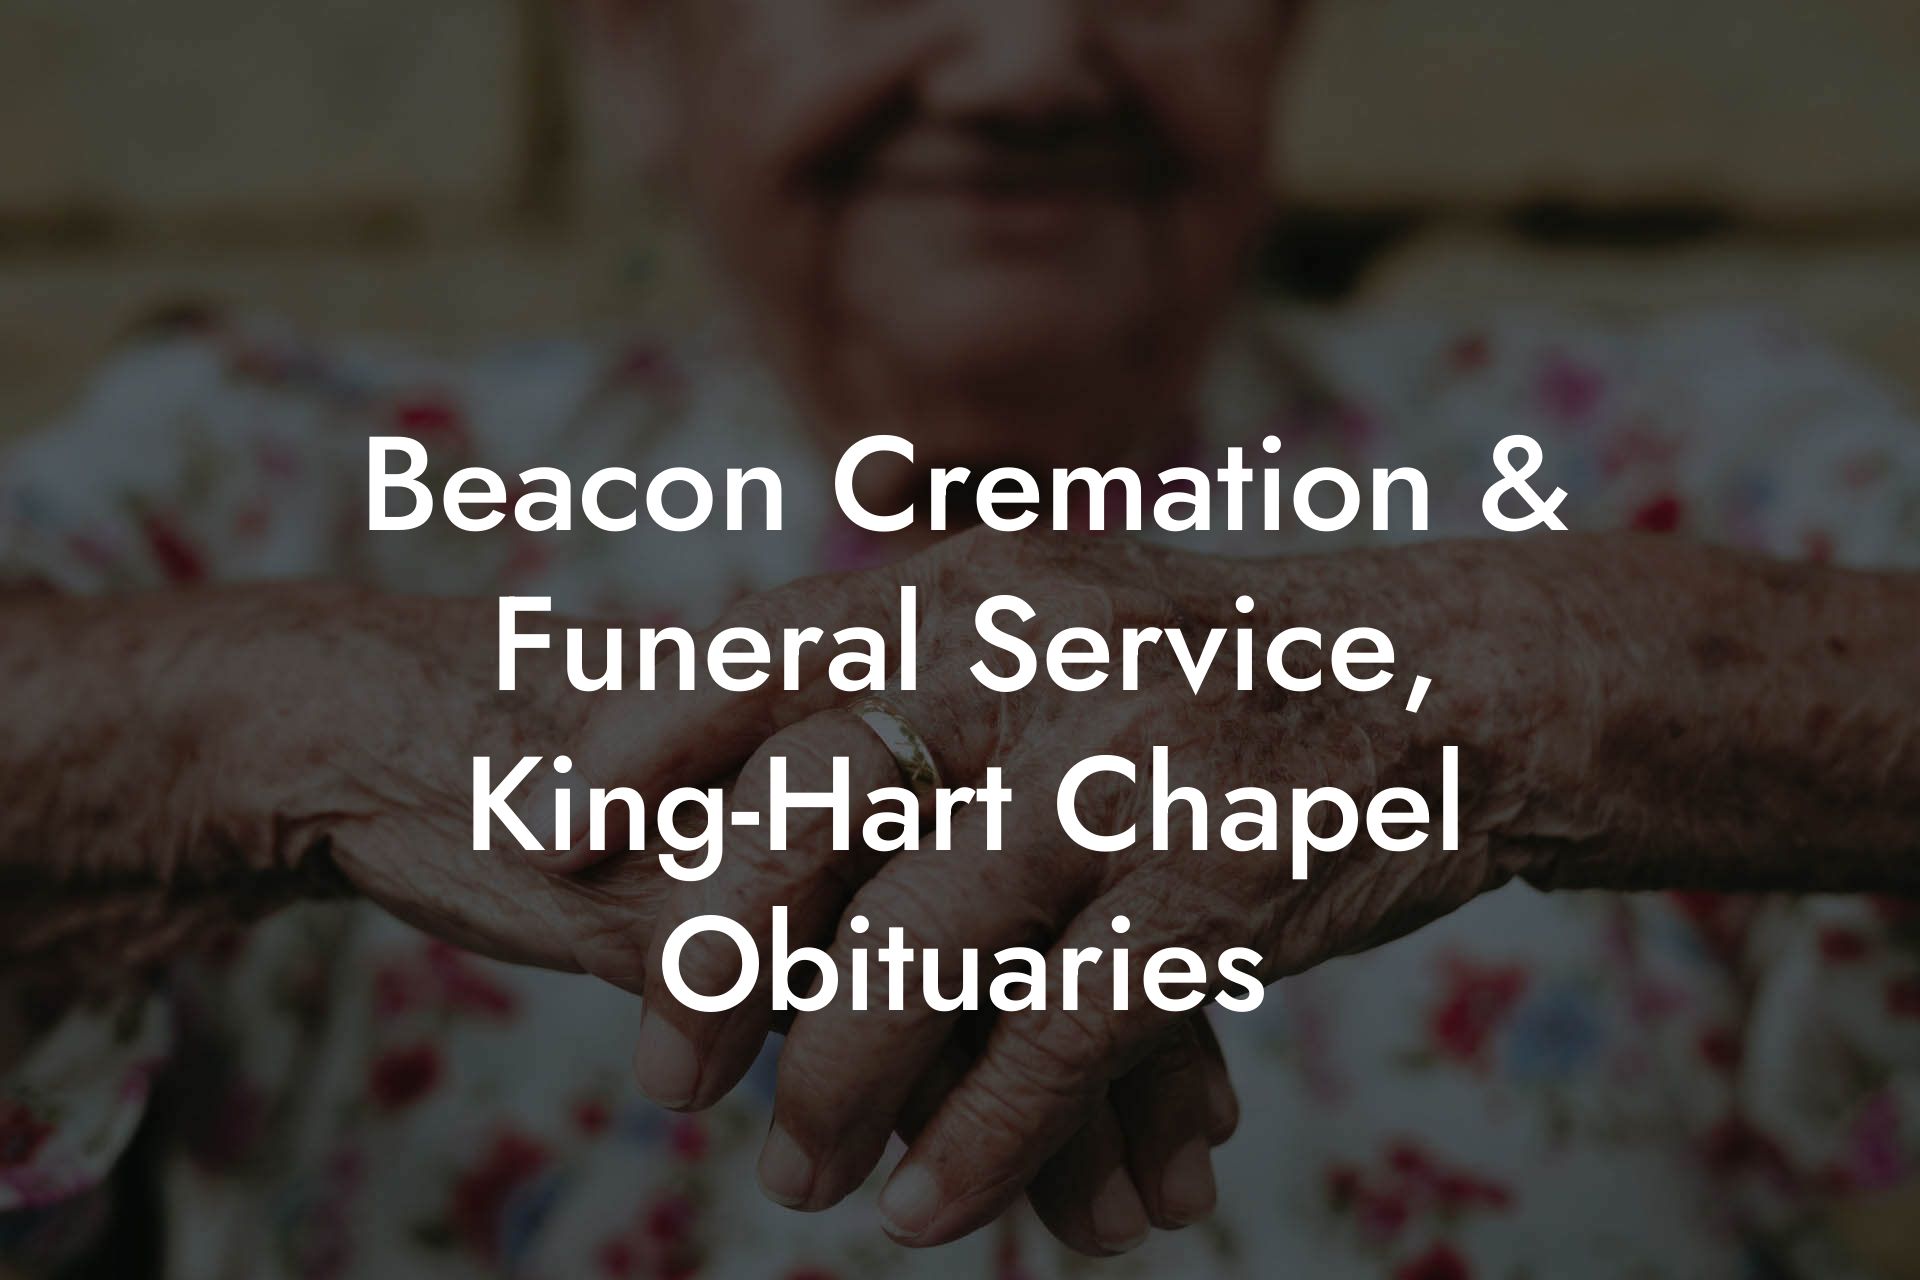 Beacon Cremation & Funeral Service, King-Hart Chapel Obituaries